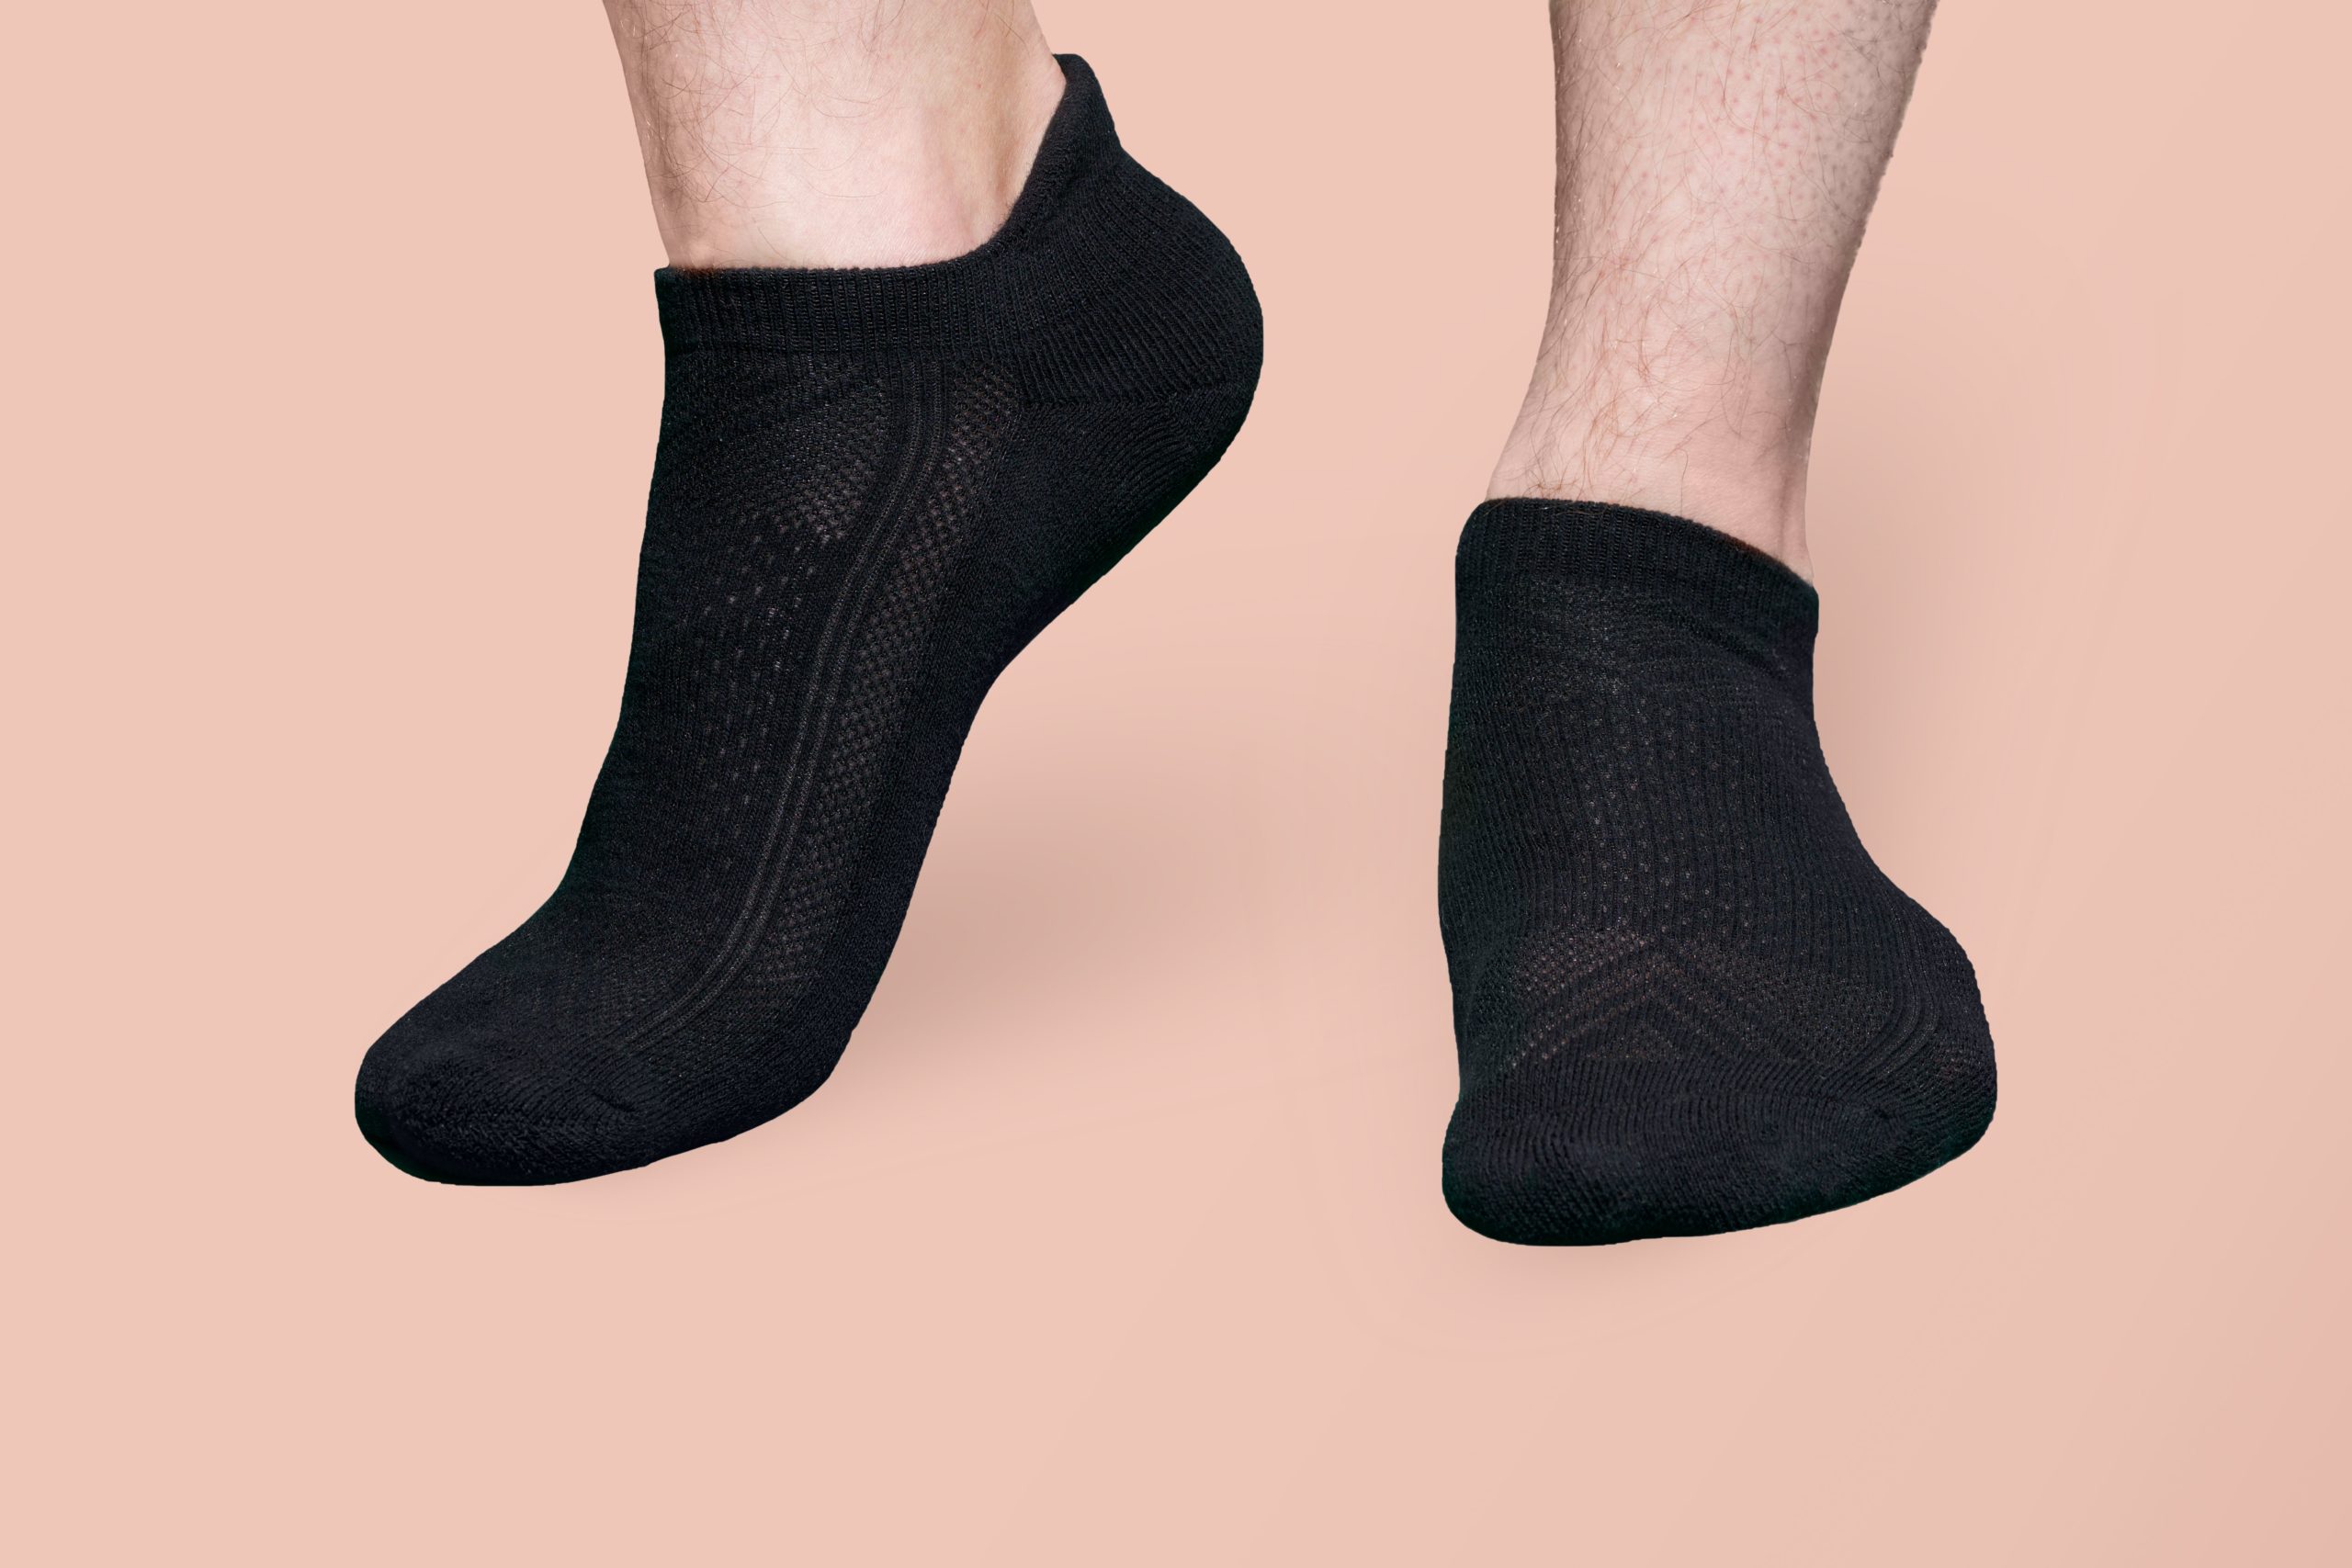 25 Best Sock Brands for Men + Women in 2021